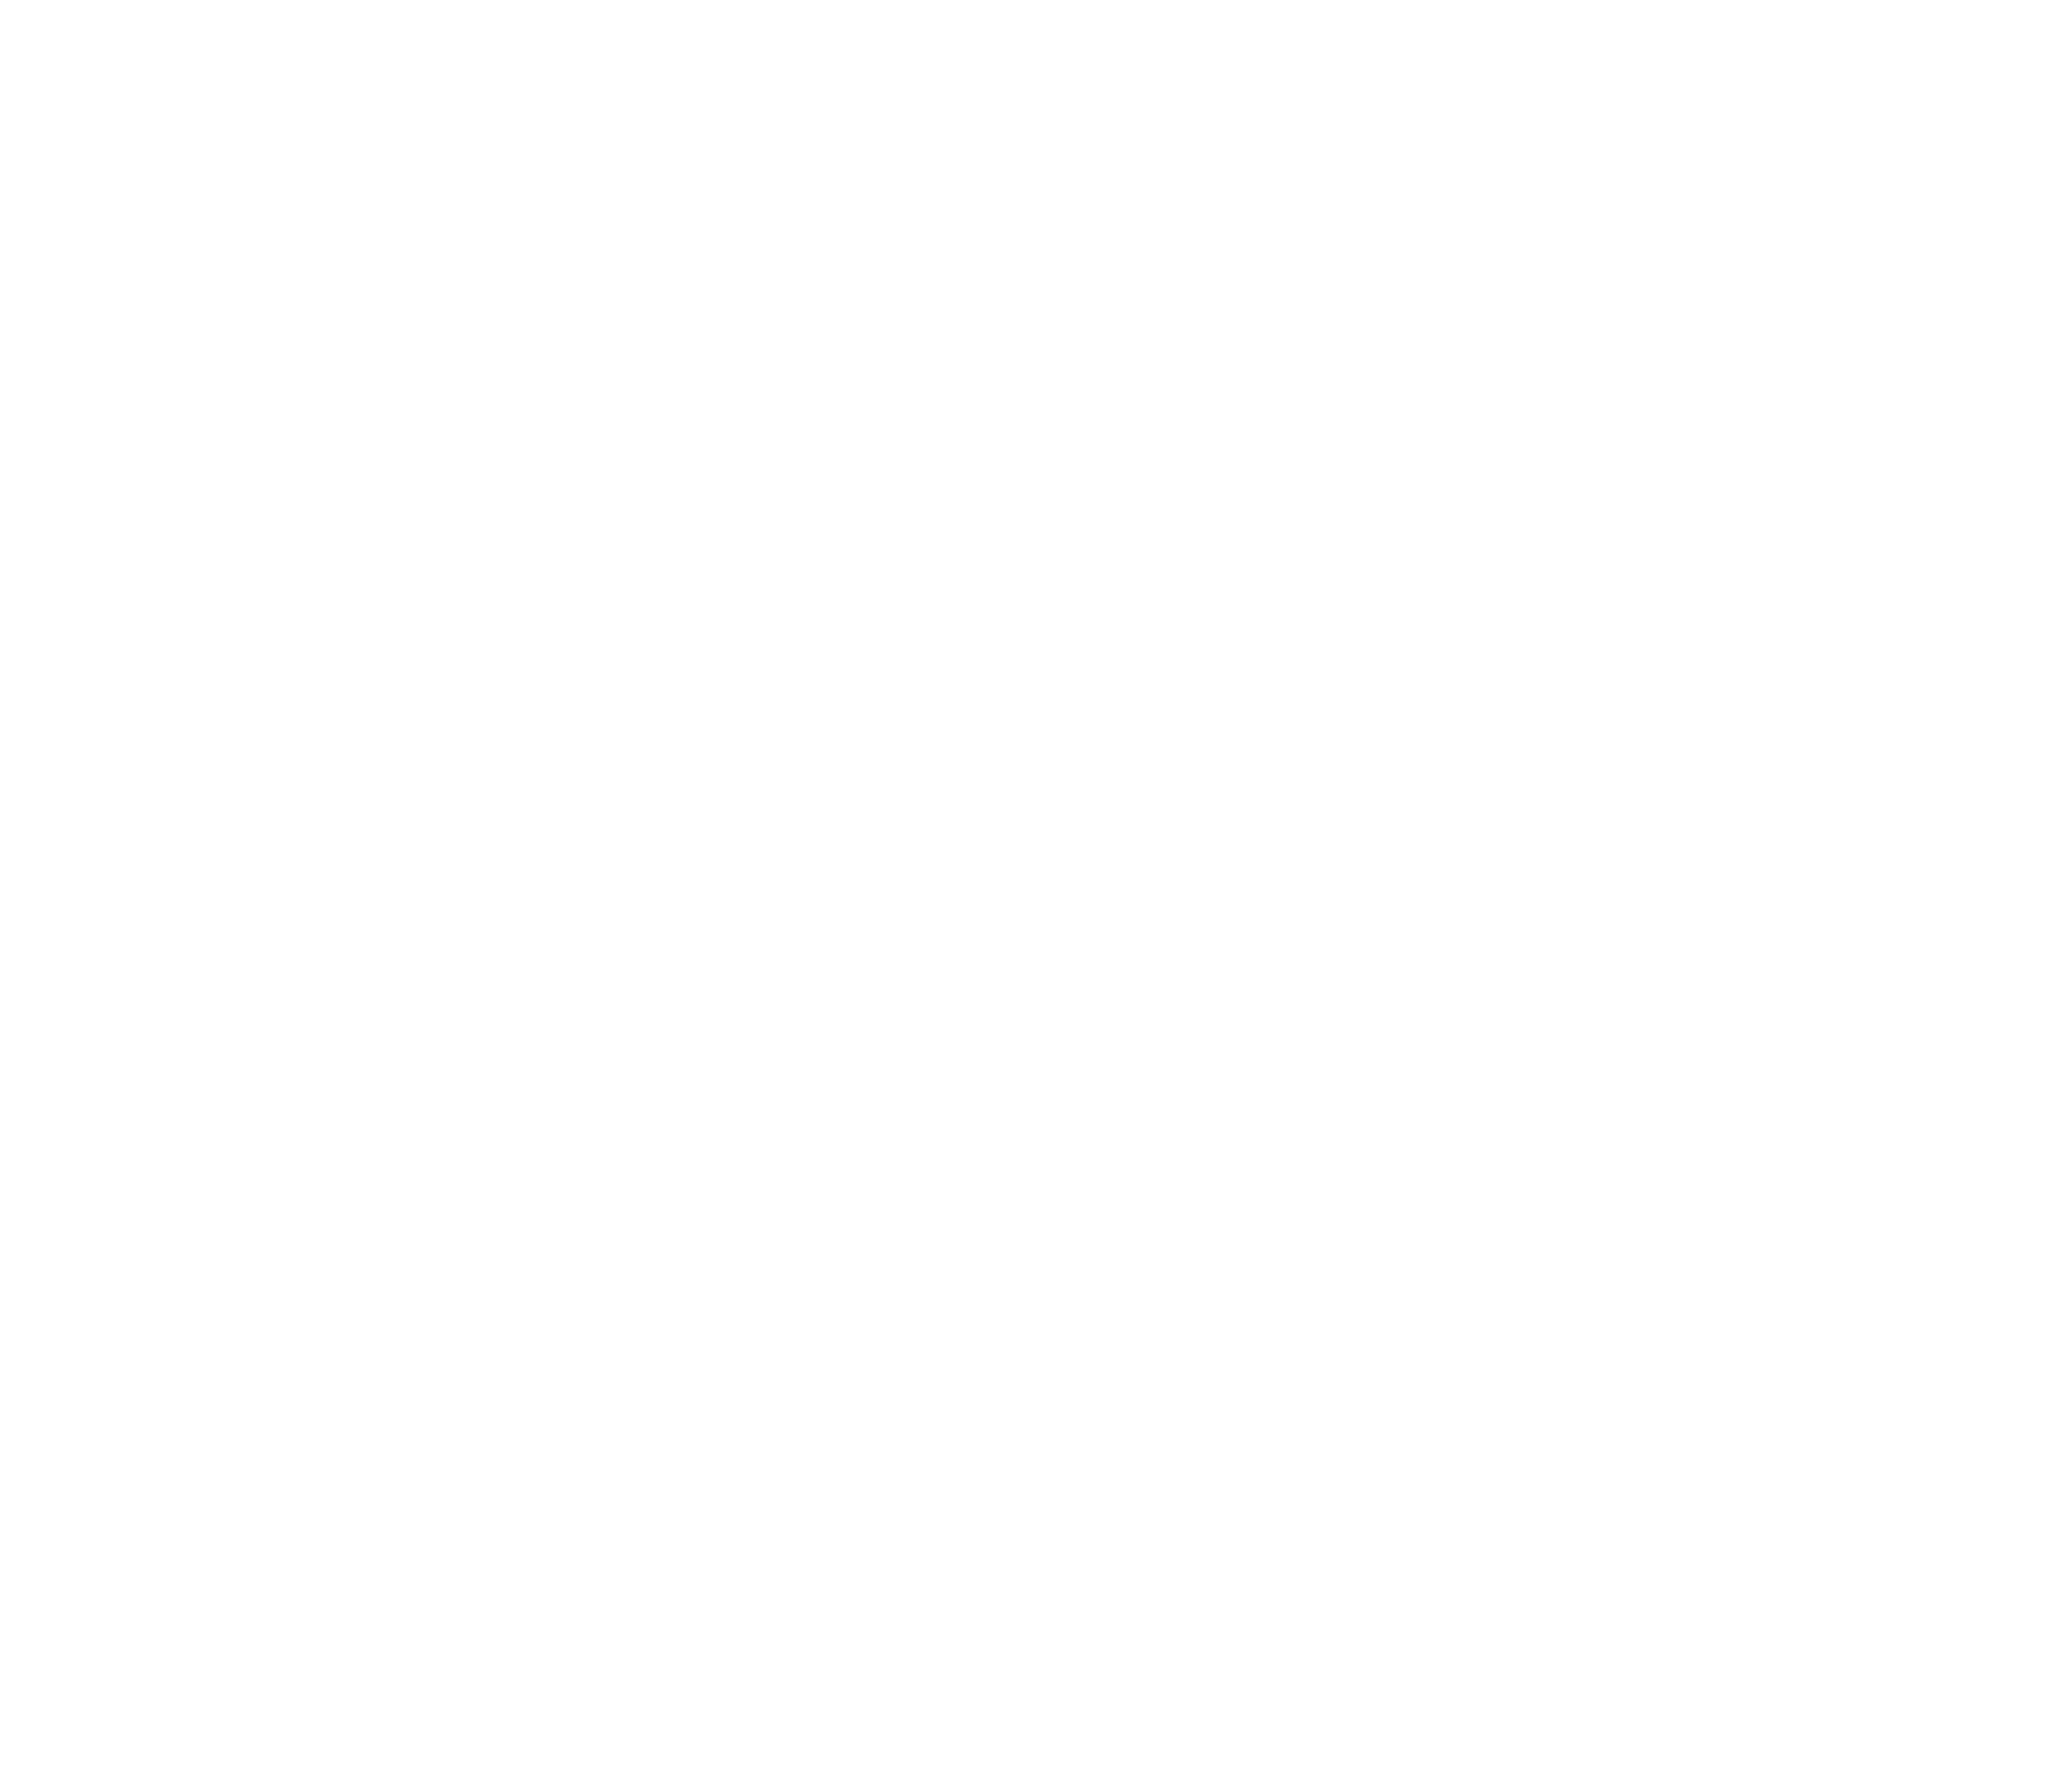 Toscana Factory Lab